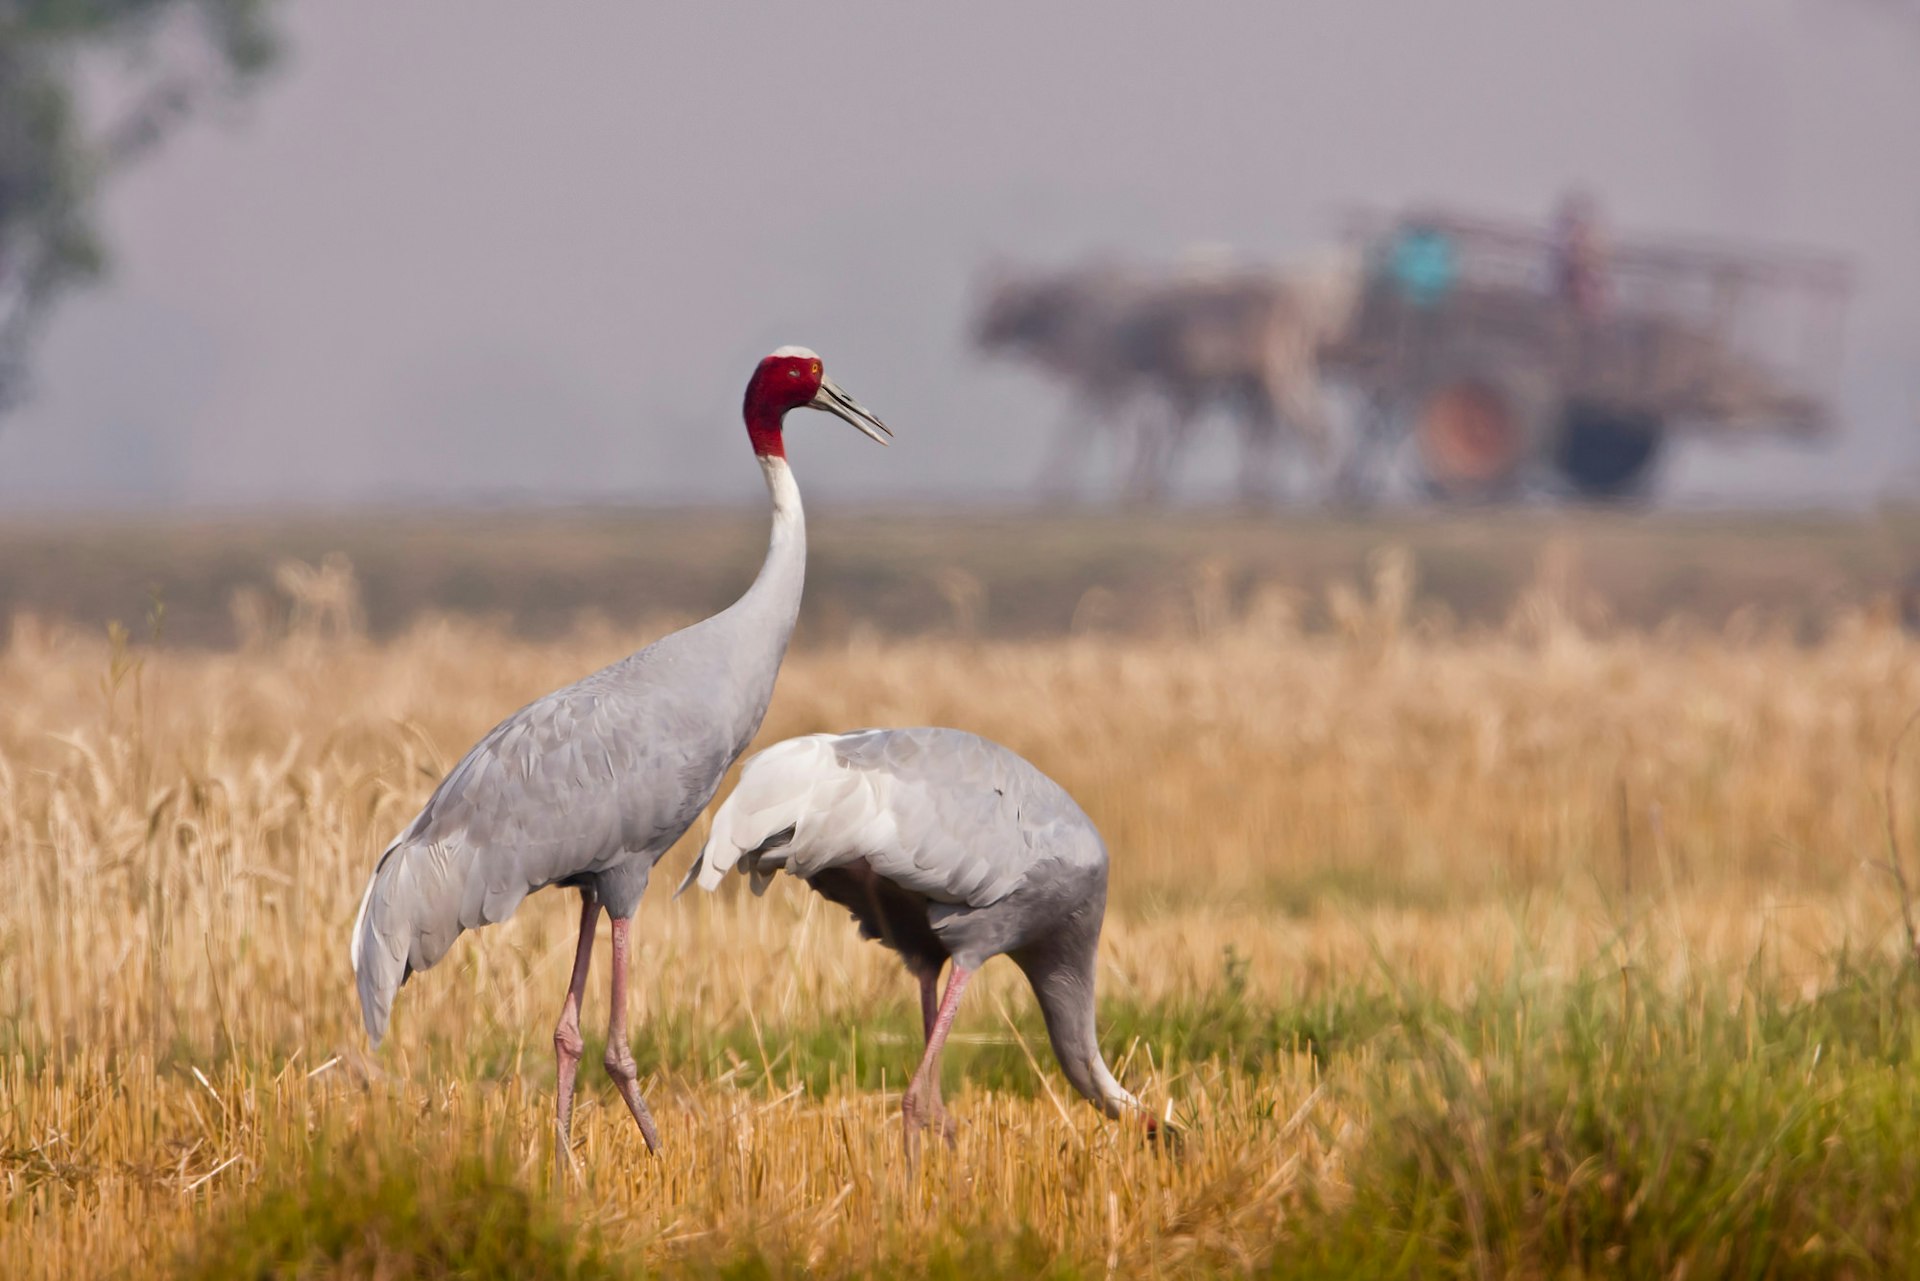 Red-headed sarus cranes stalk the wetlands around Lumbini © Utopia_88 / Getty Images